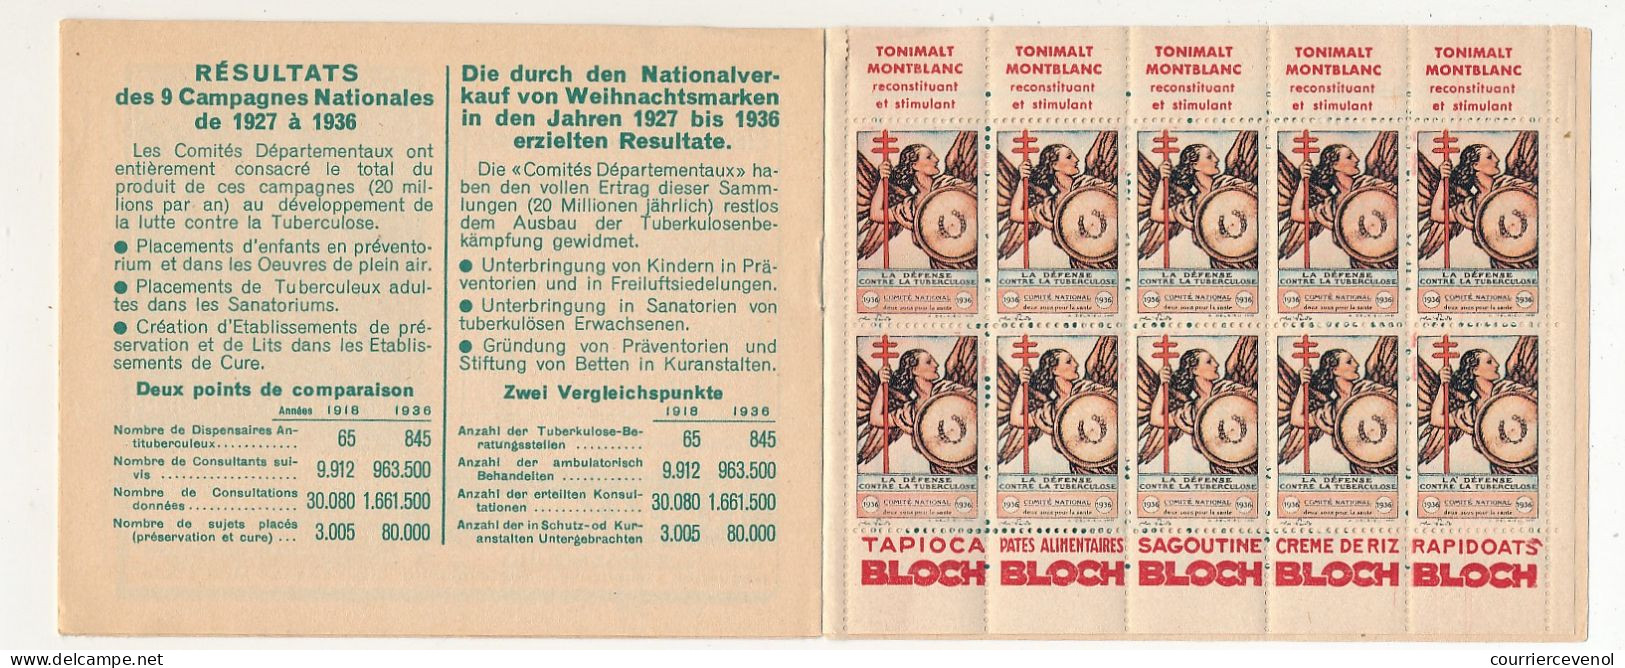 Carnet anti-tuberculeux 1936 Association Alsacienne Lorraine contre la Tuberculose - Bilingue - 20 Timbres 10cts / 2F